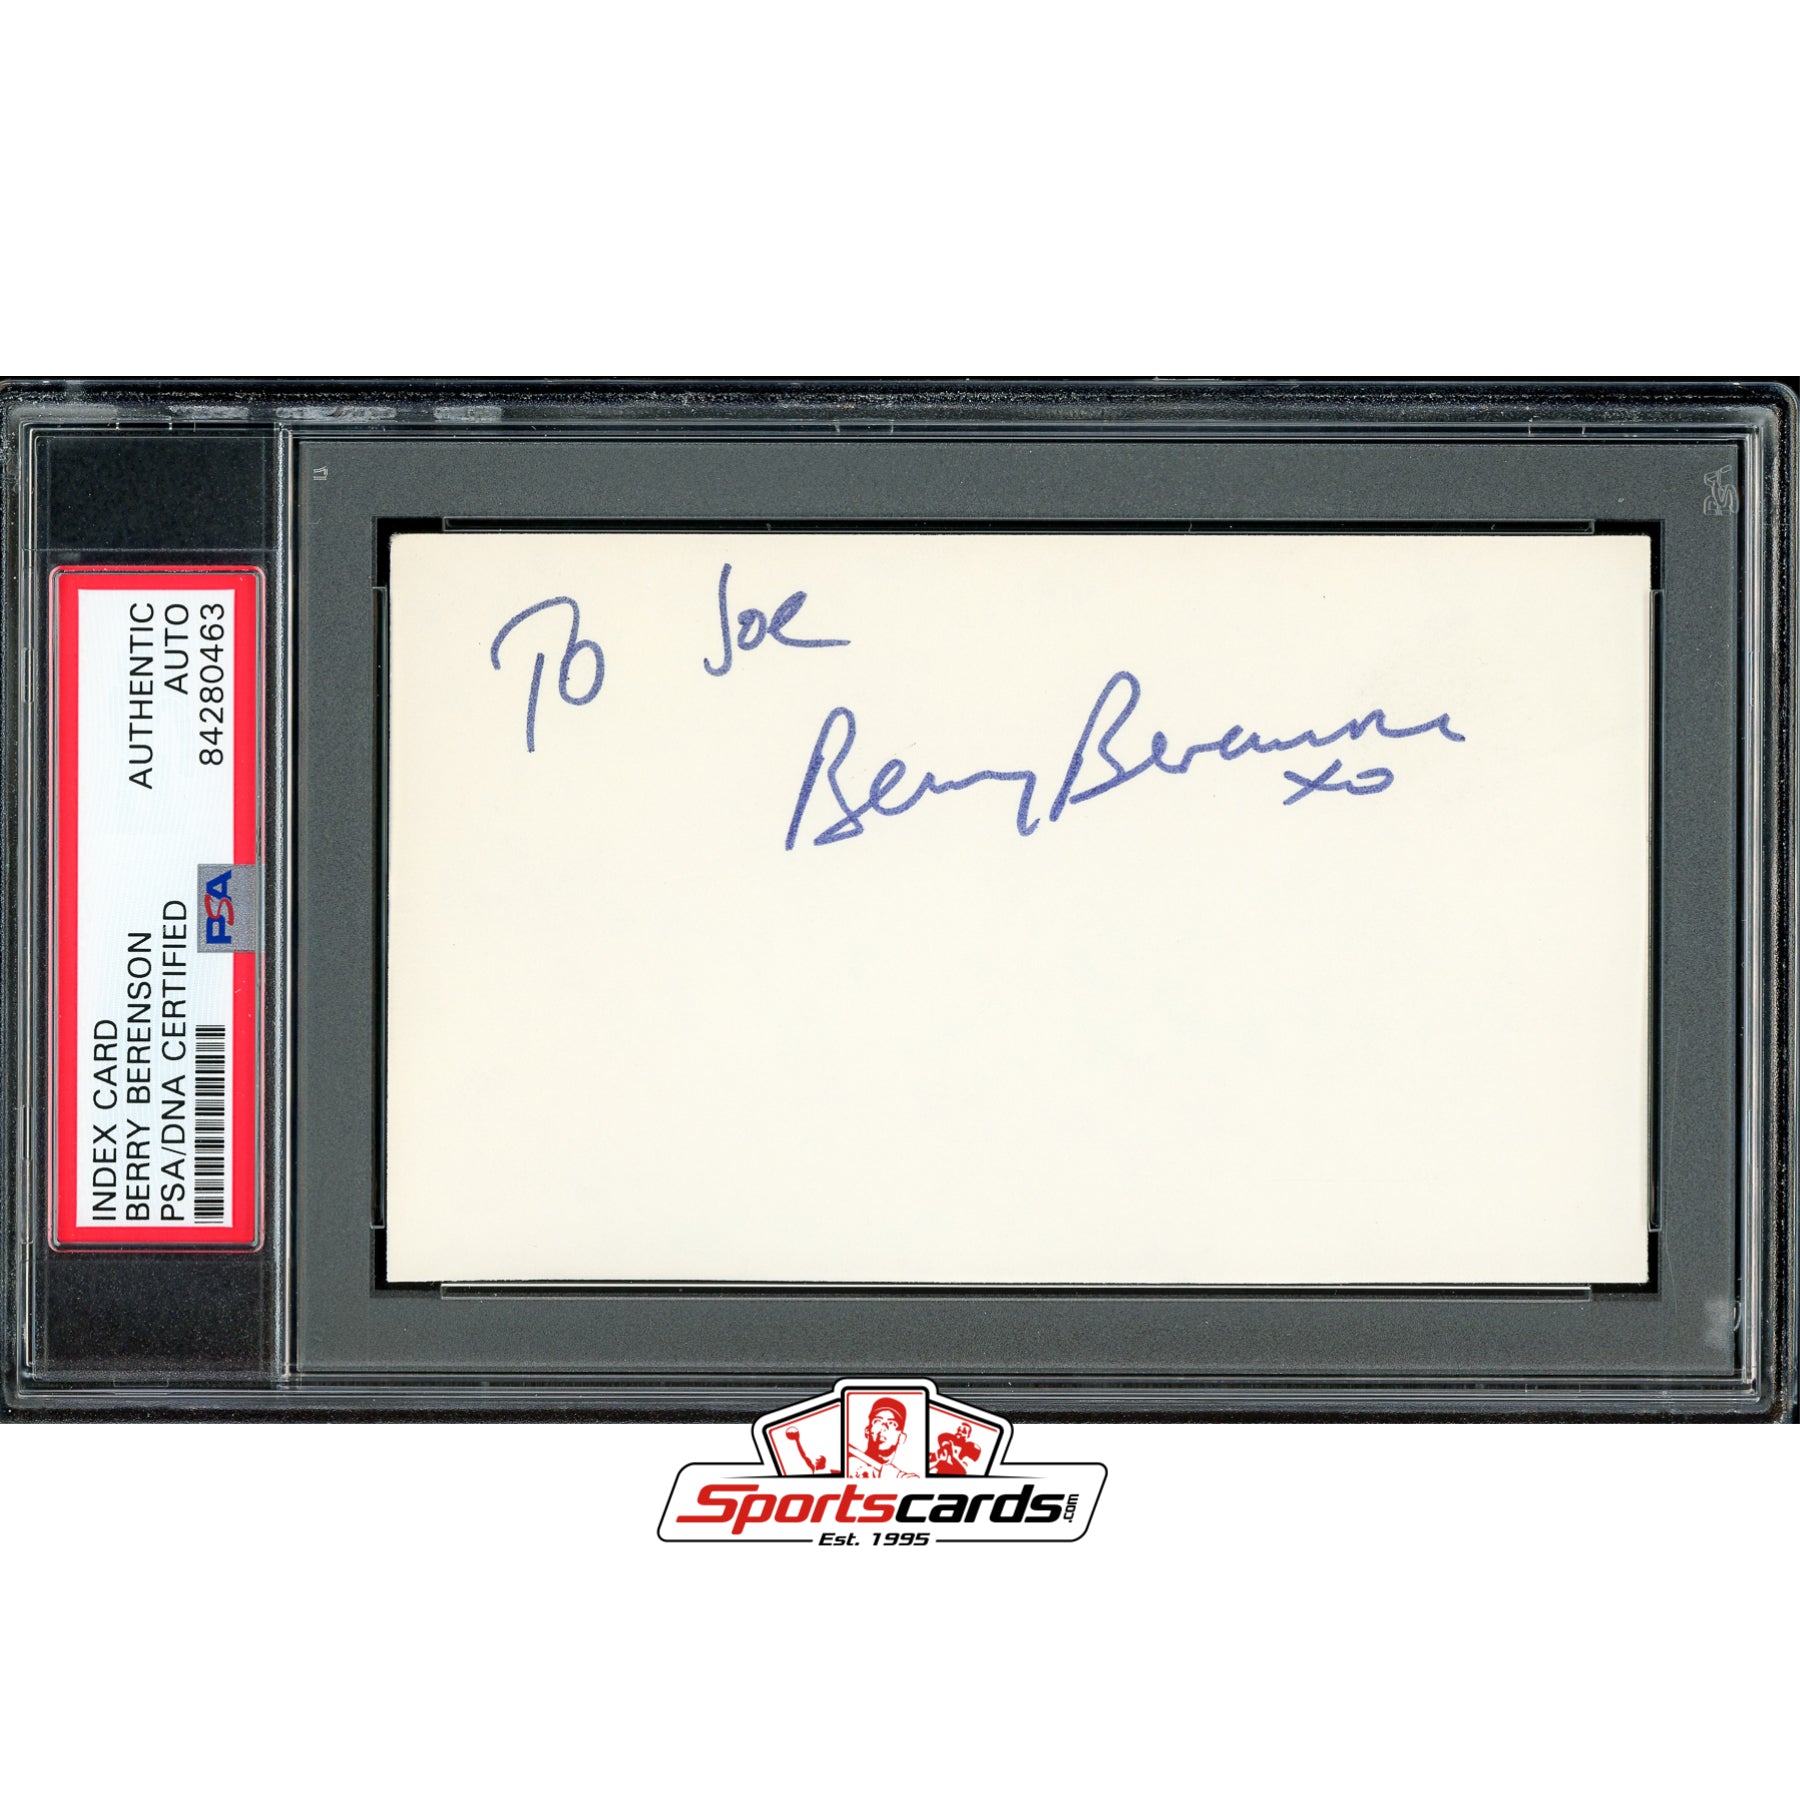 Berry Berenson (d. 2001) Signed 3x5 Index Card Autograph PSA/DNA